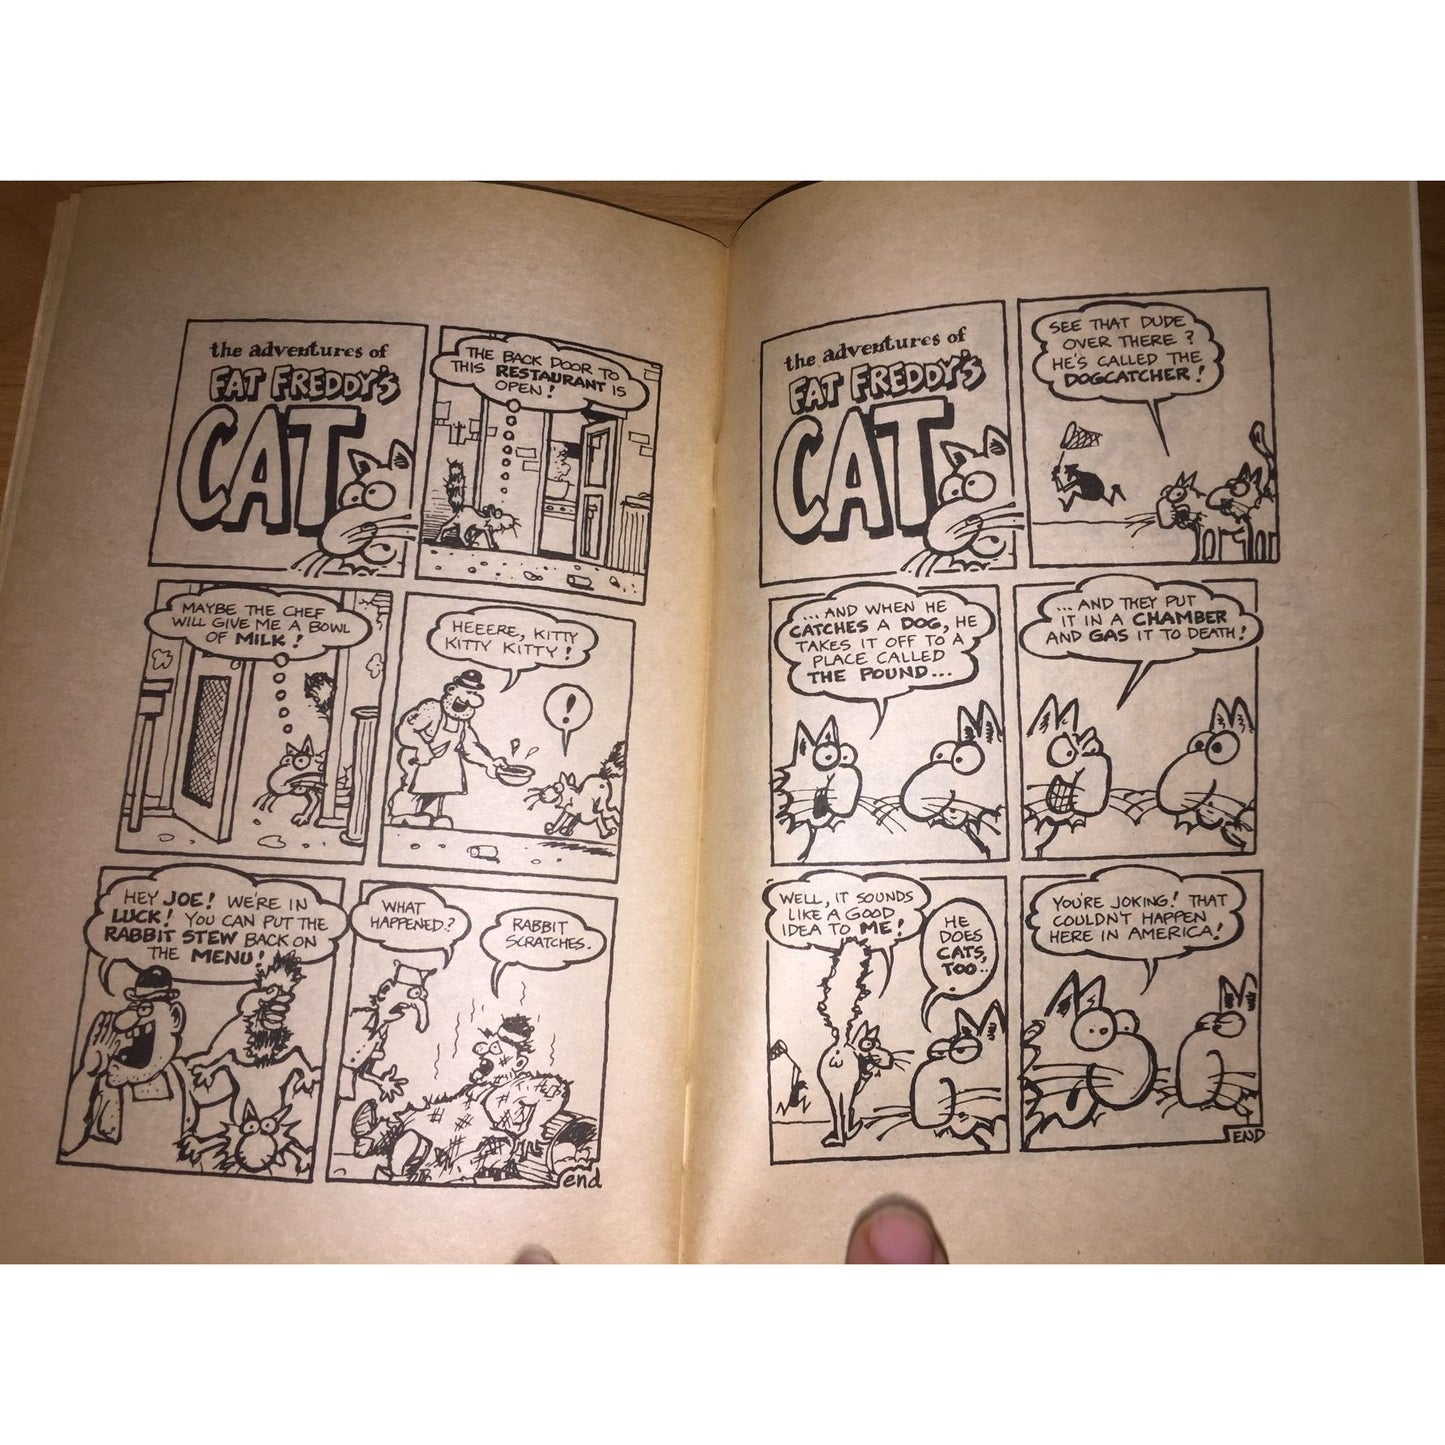 FAT FREDDY’S CAT #1 Vintage Comic book by Gilbert Shelton